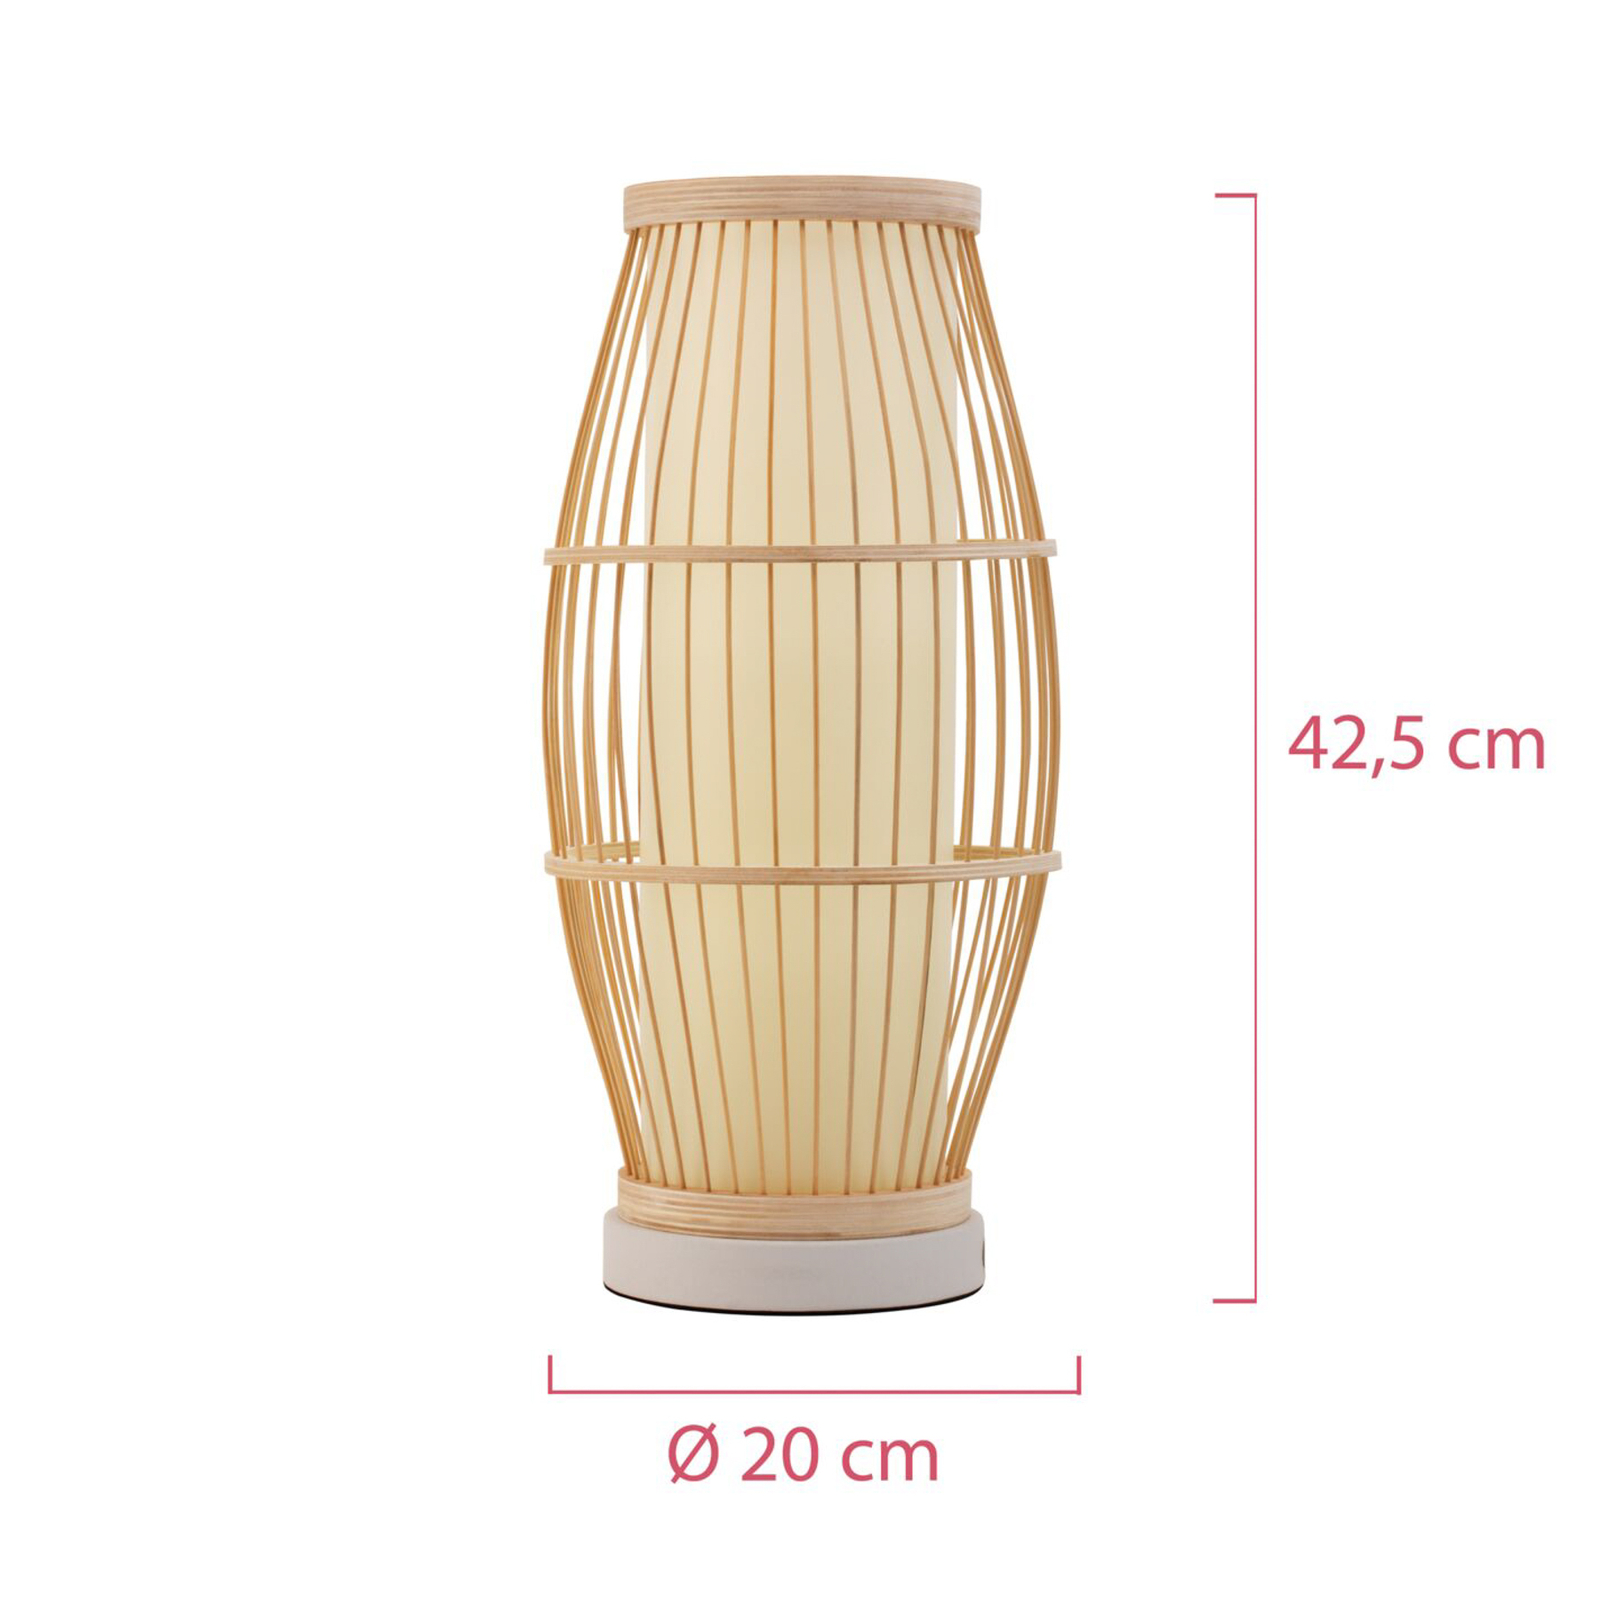 Pauleen Woody Passion bordslampa av bambu